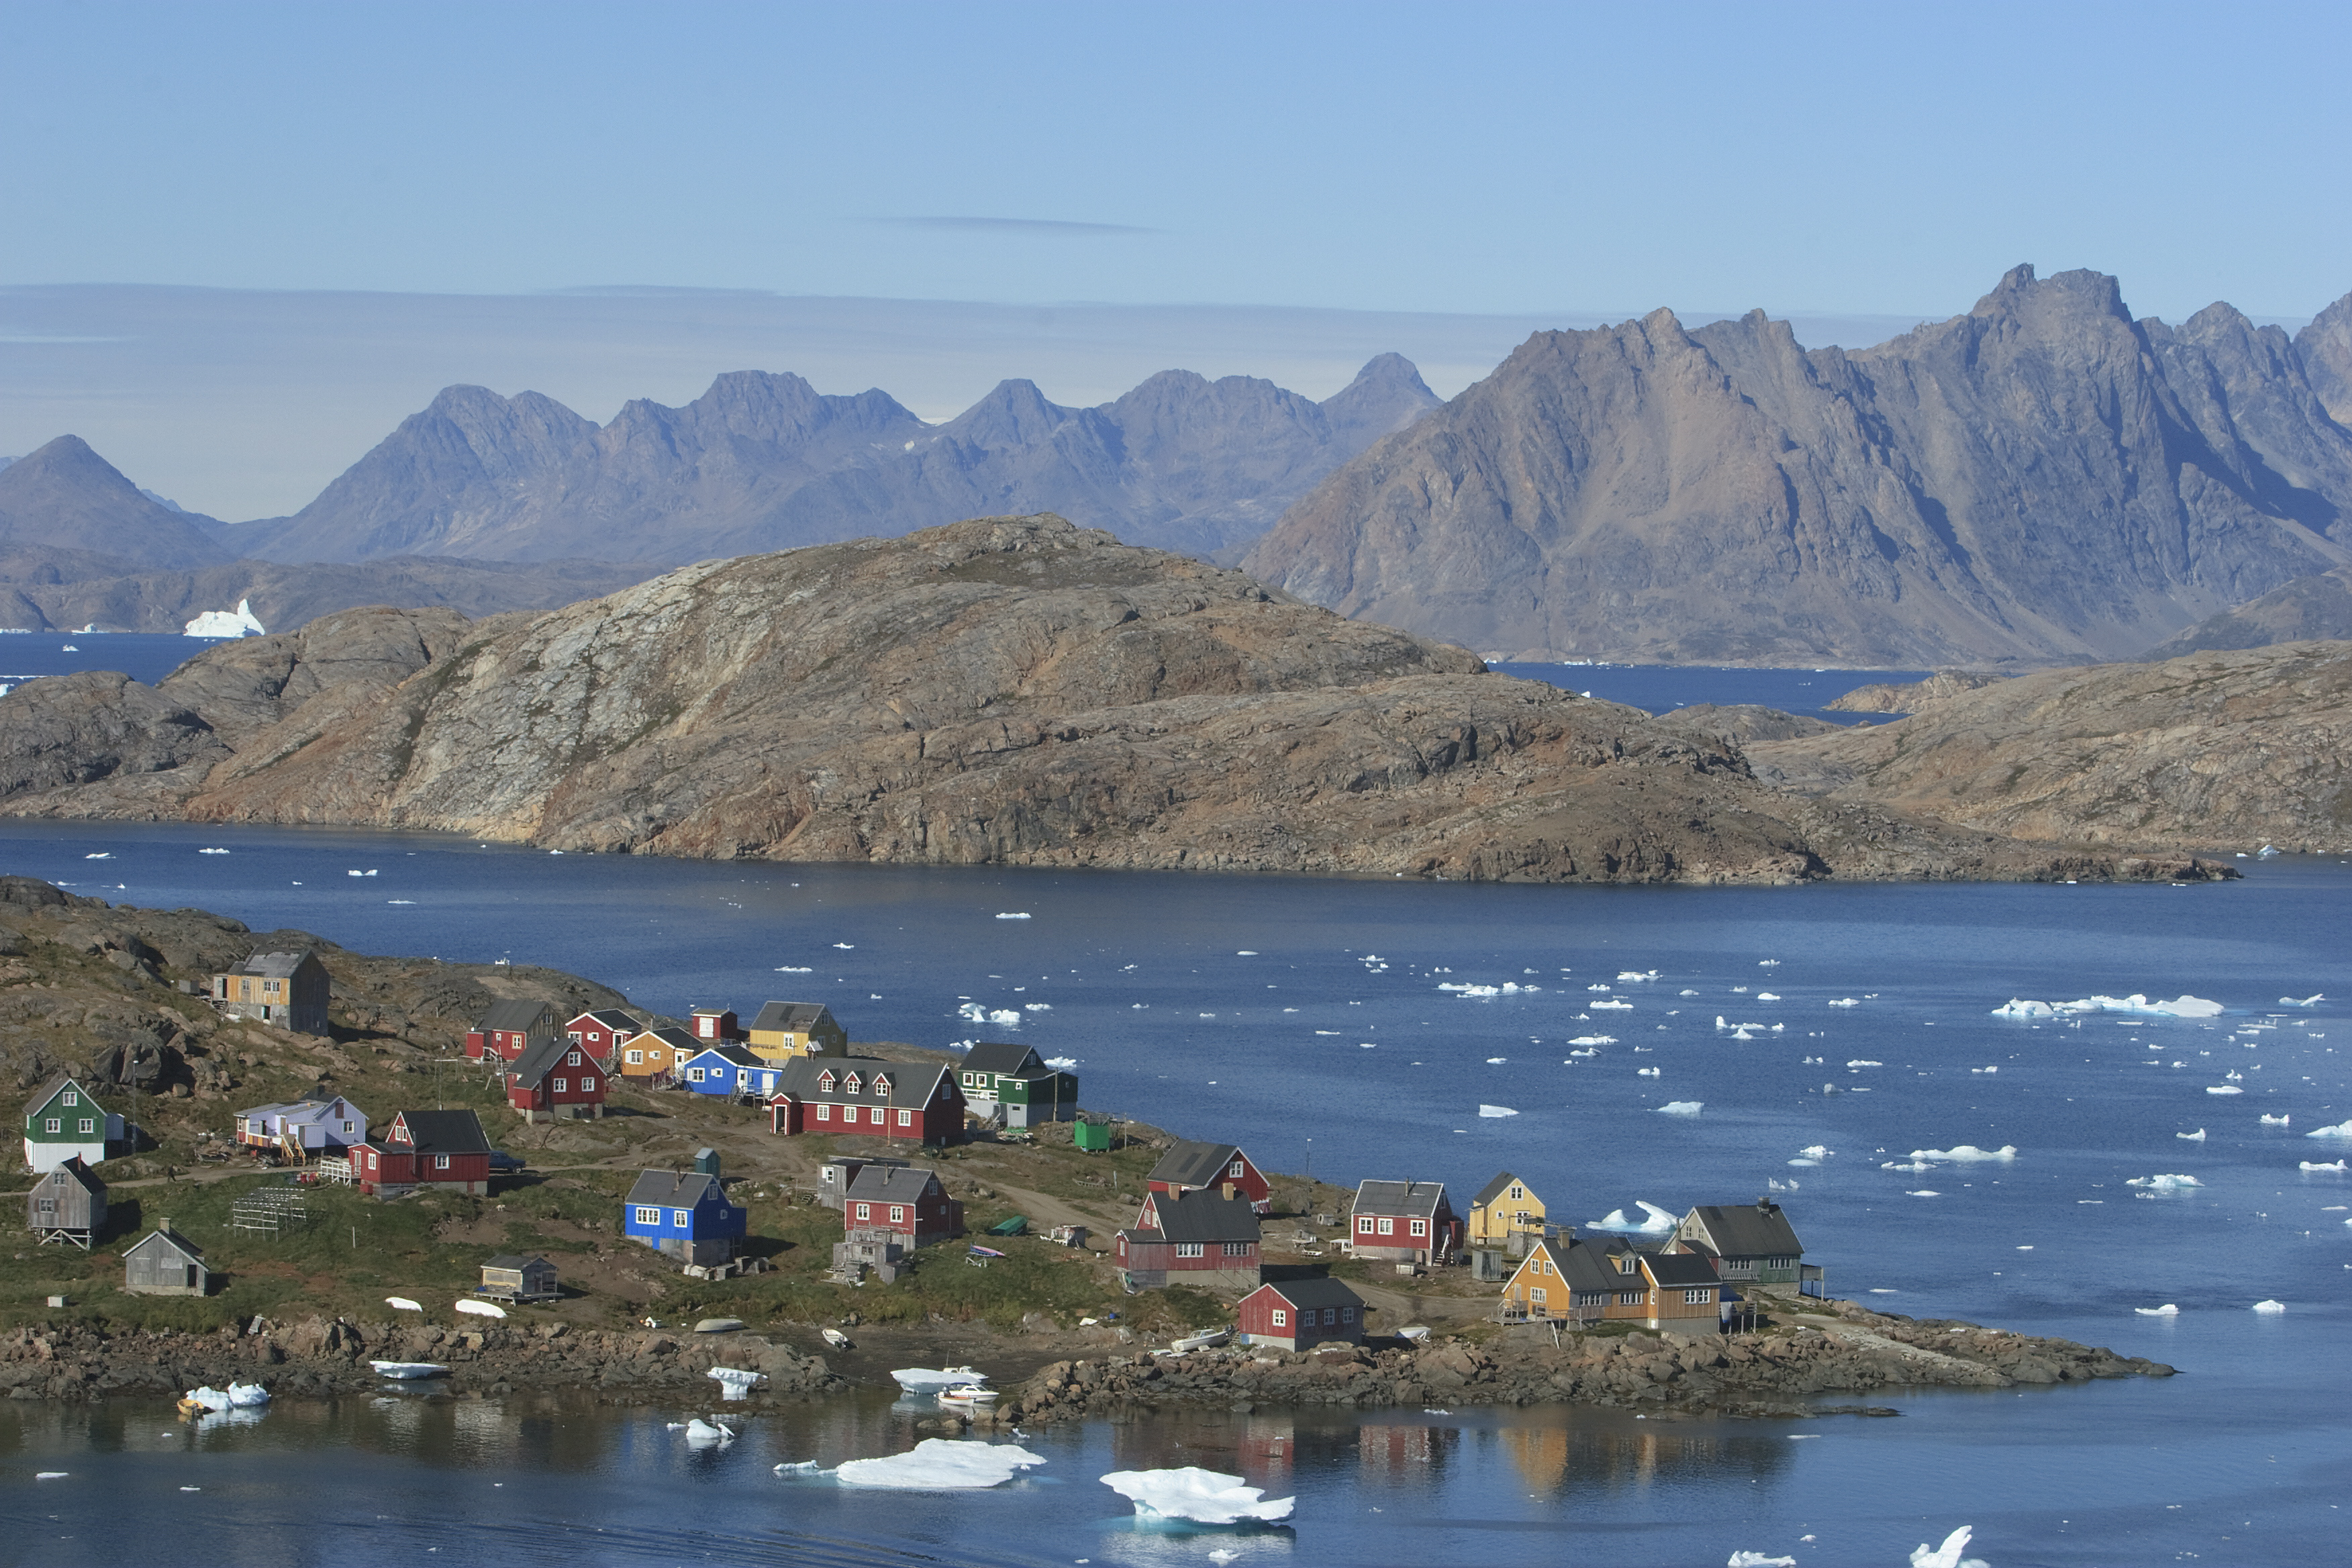 tourhub | Exodus | Greenland Explorer: Sail and Soar the Alpine Arctic 